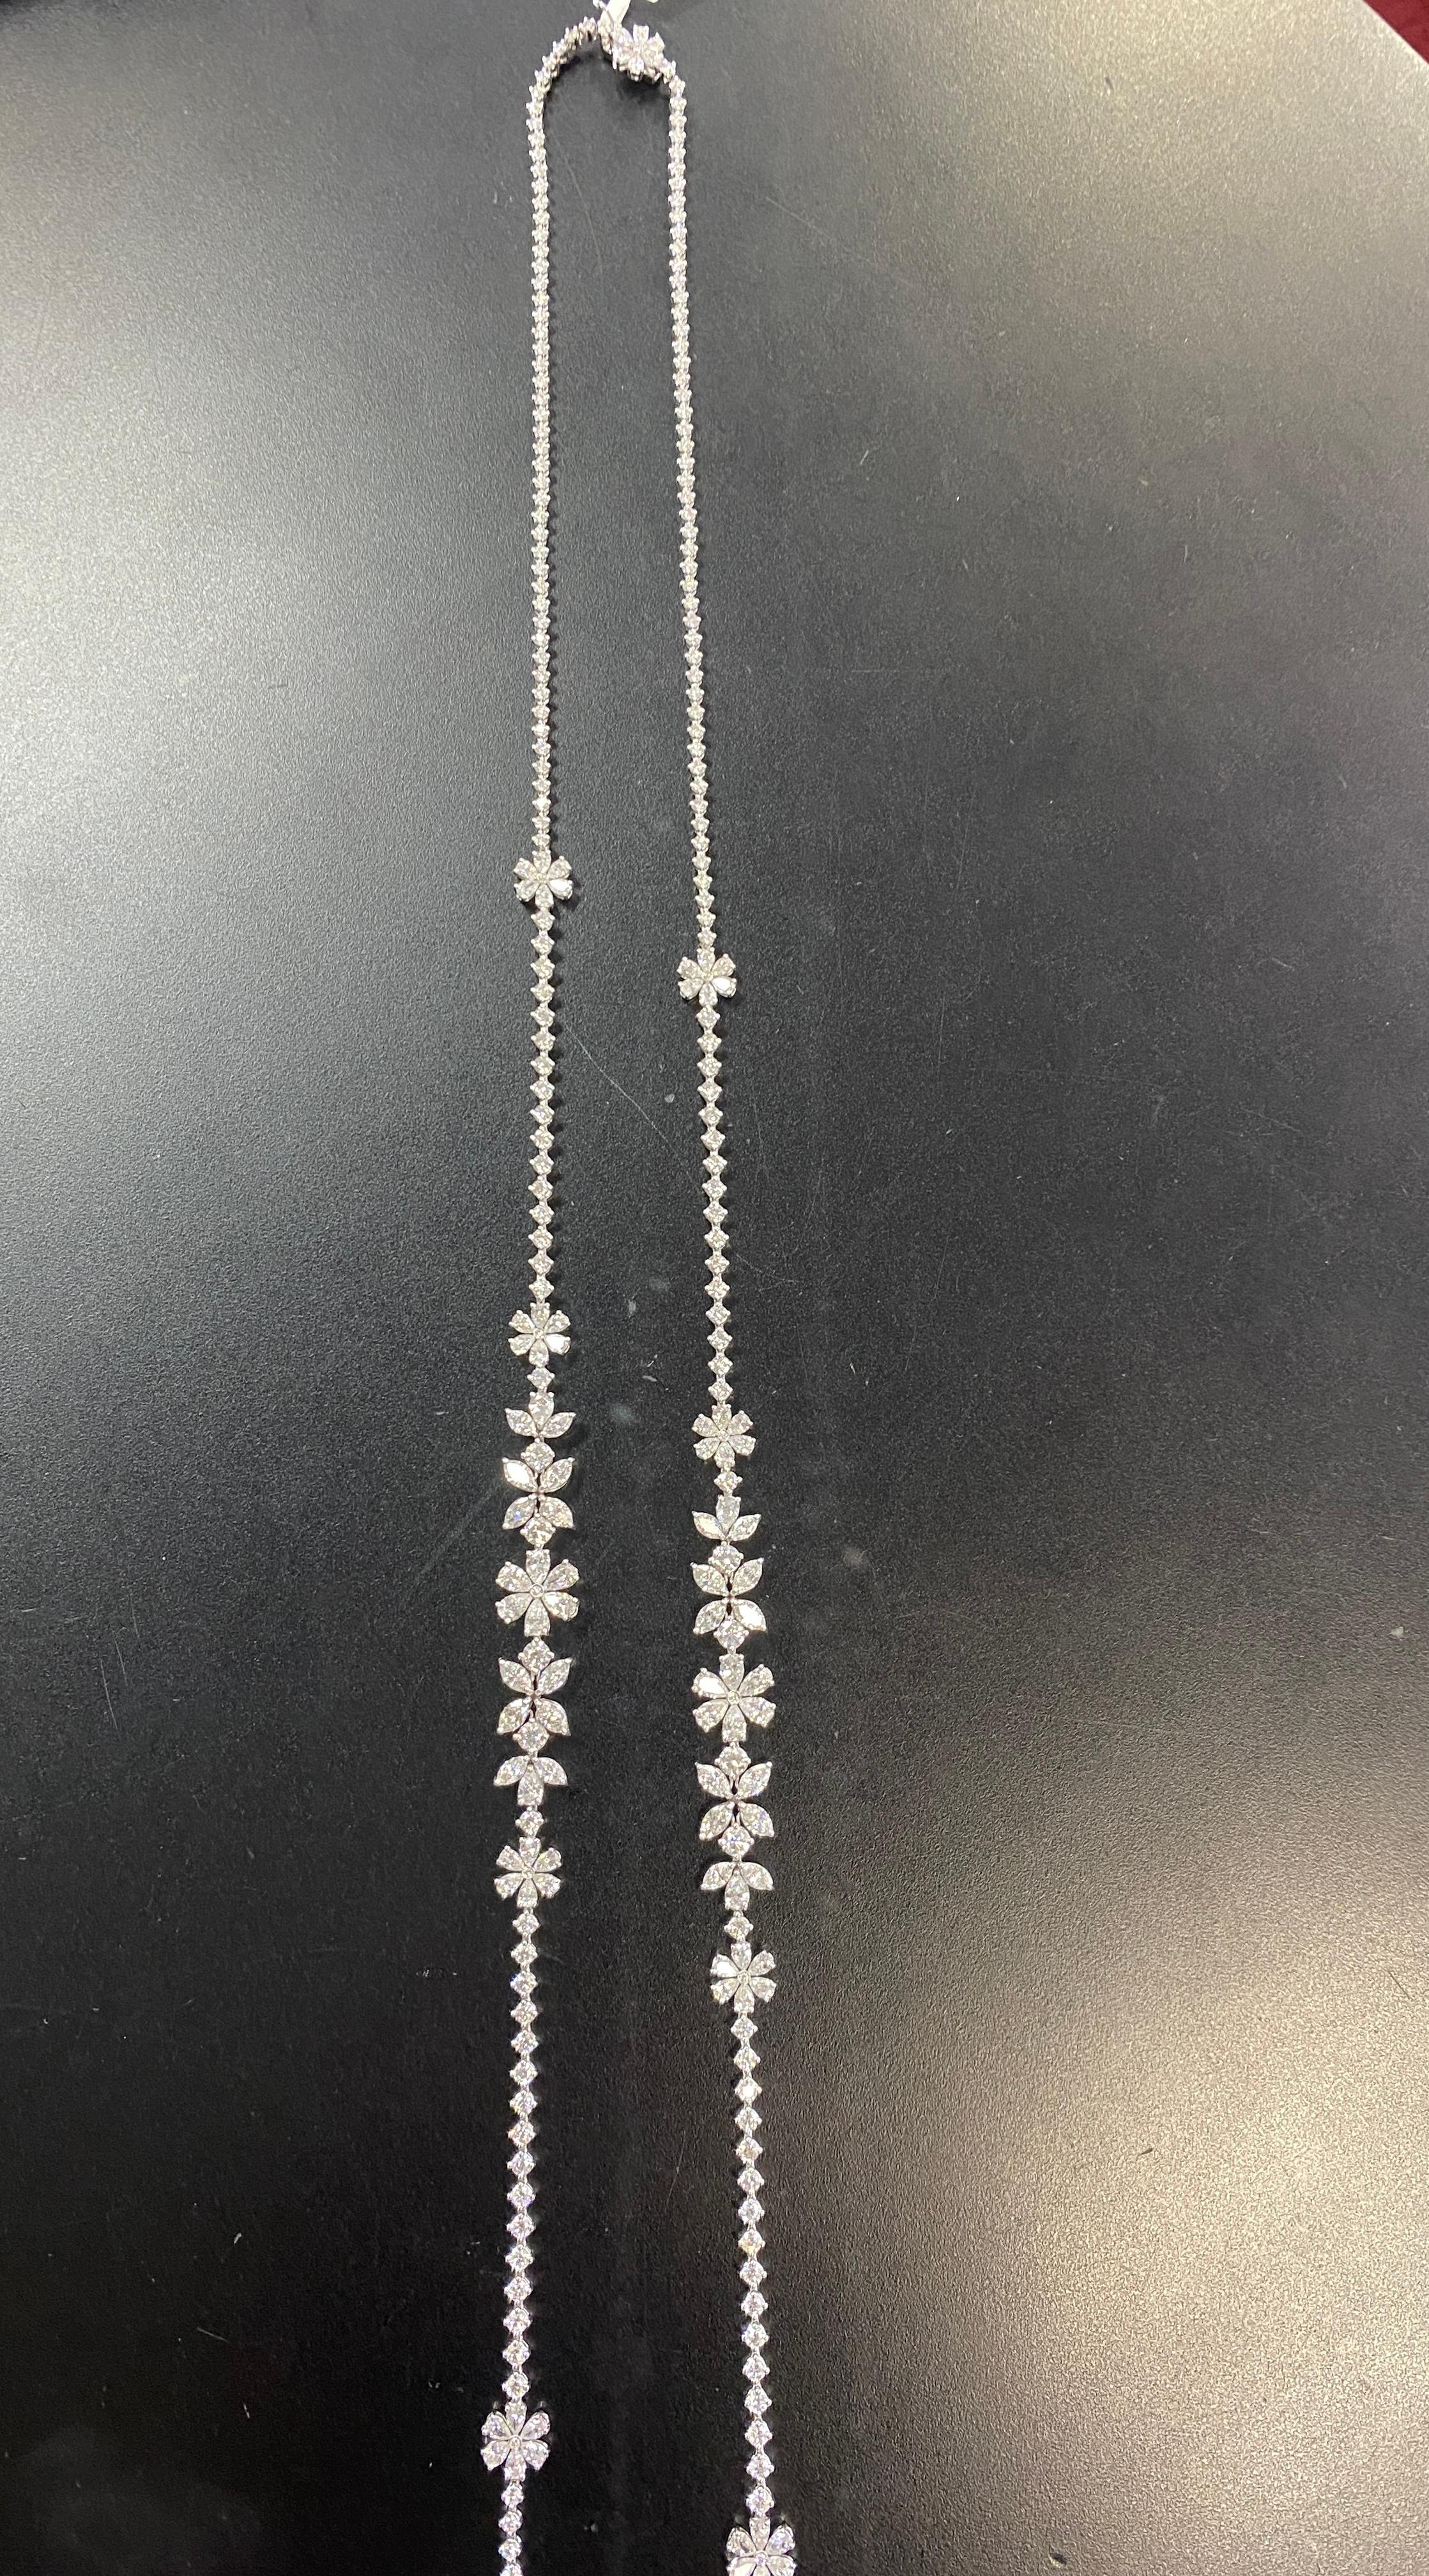 Contemporary Zydo 18k Diamond Flower Necklace 27.28 Carats VS-F Color